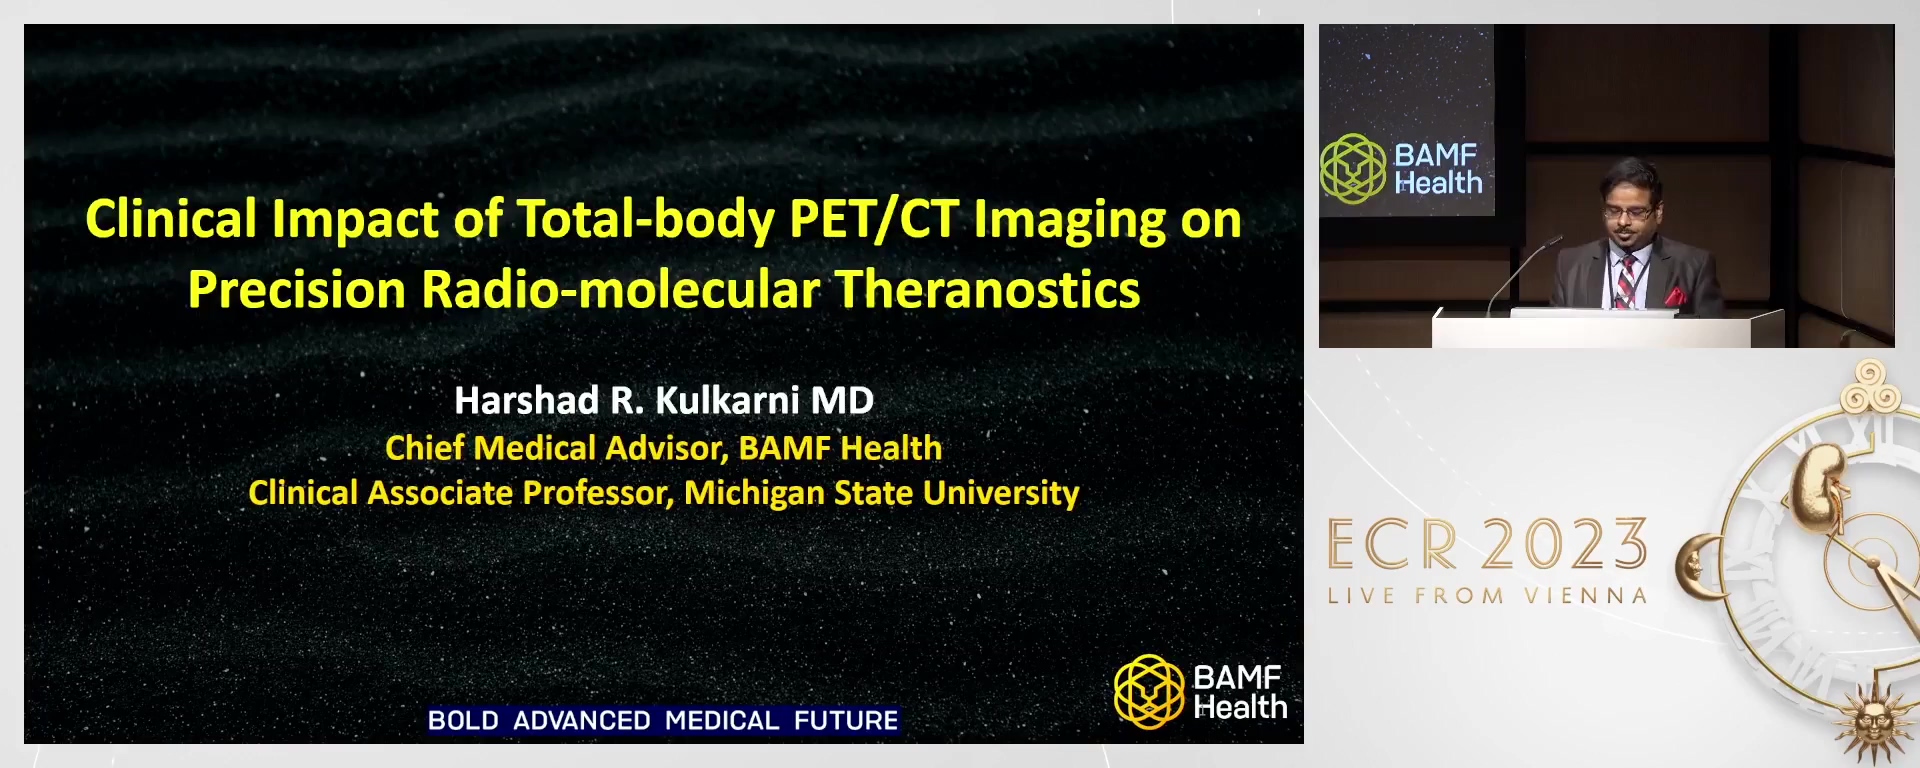 Clinical Impact of Total-body PET/CT Imaging on Precision Radio-molecular Theranostics - Harshad R Kulkarni, Grand Rapids / US